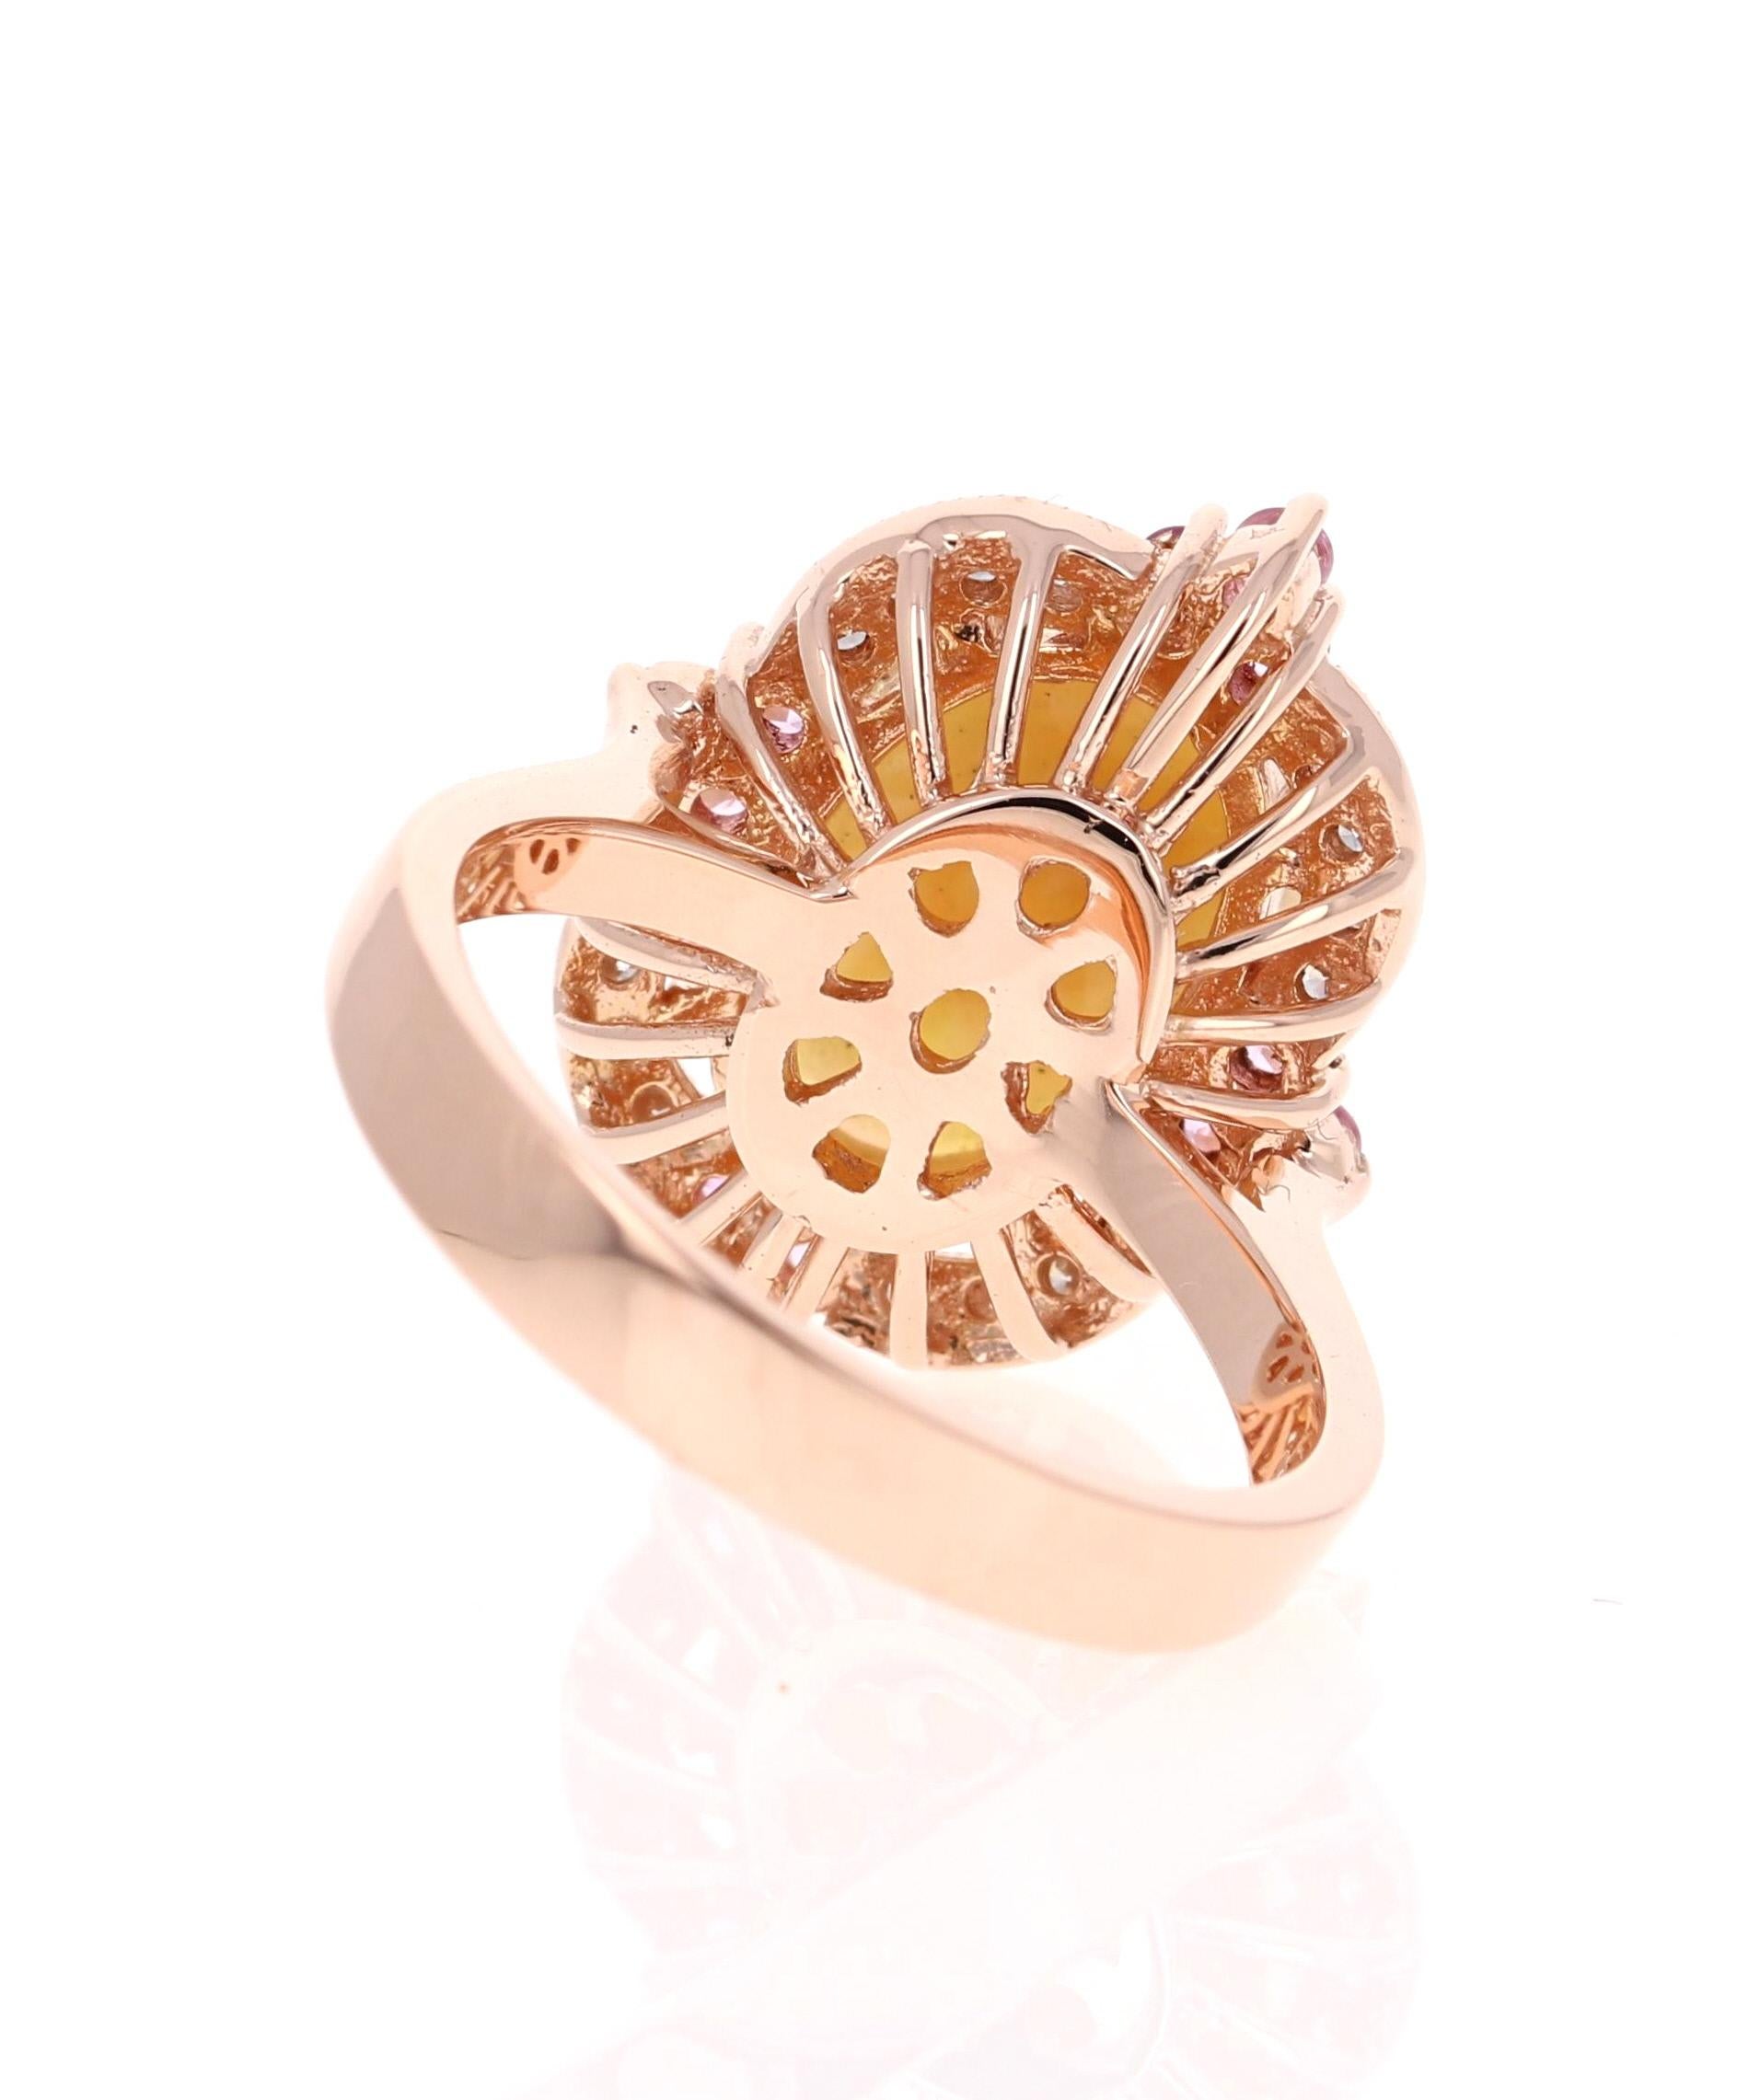 Oval Cut 3.24 Carat Opal Diamond 18 Karat Rose Gold Ring For Sale